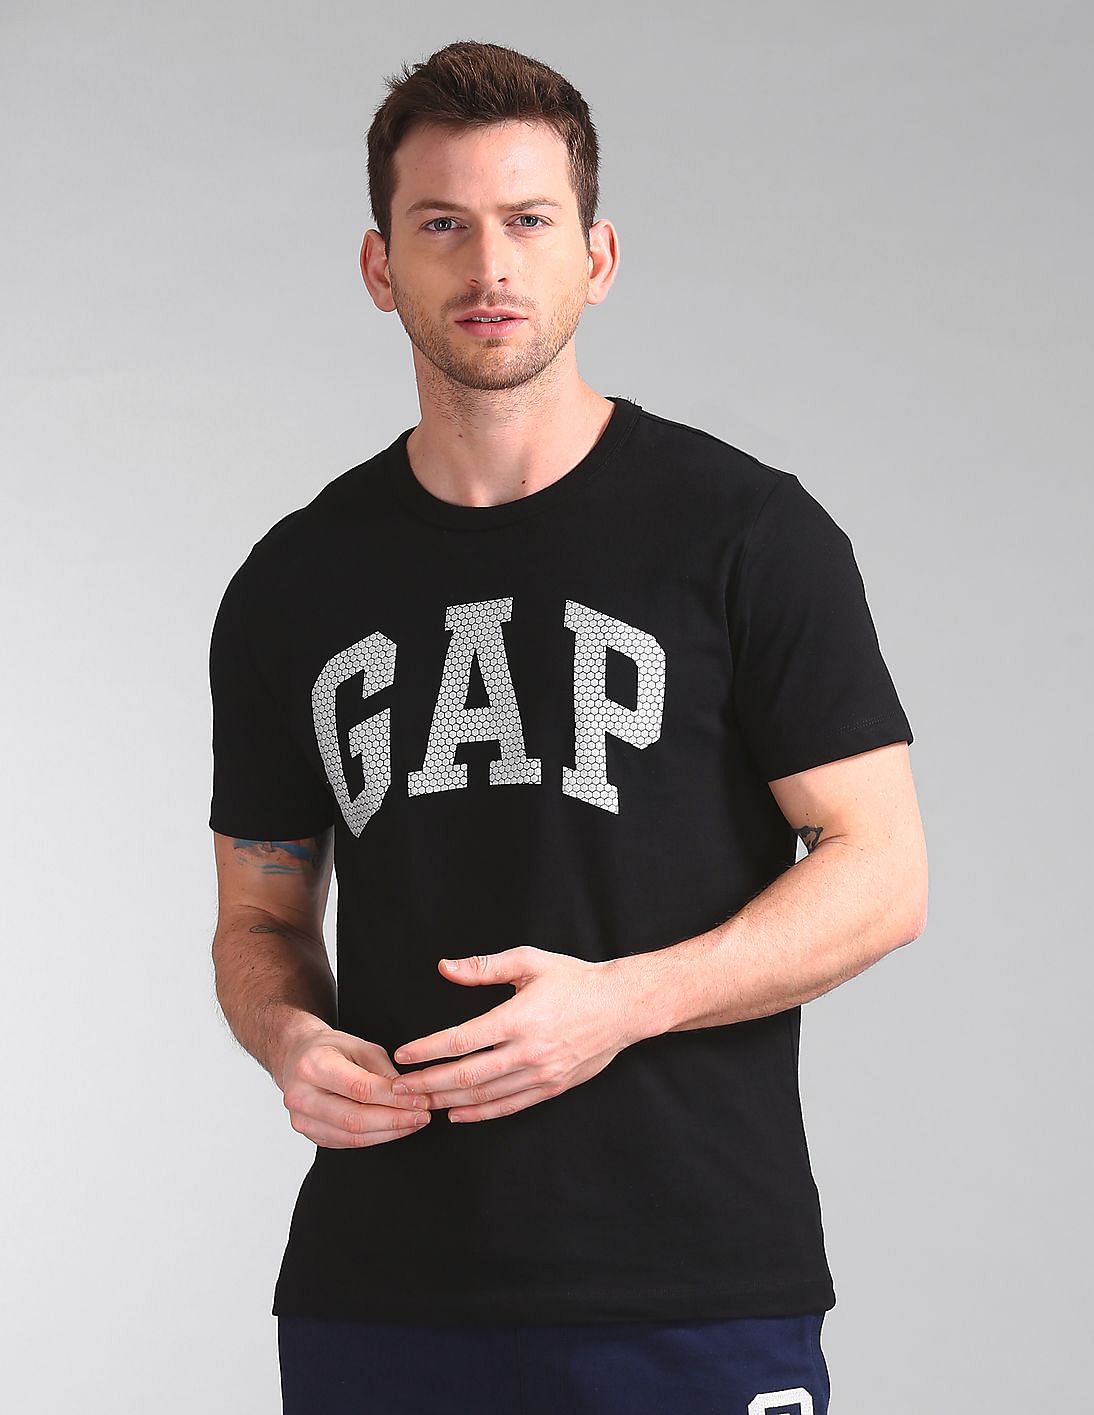 gap t shirt price in india